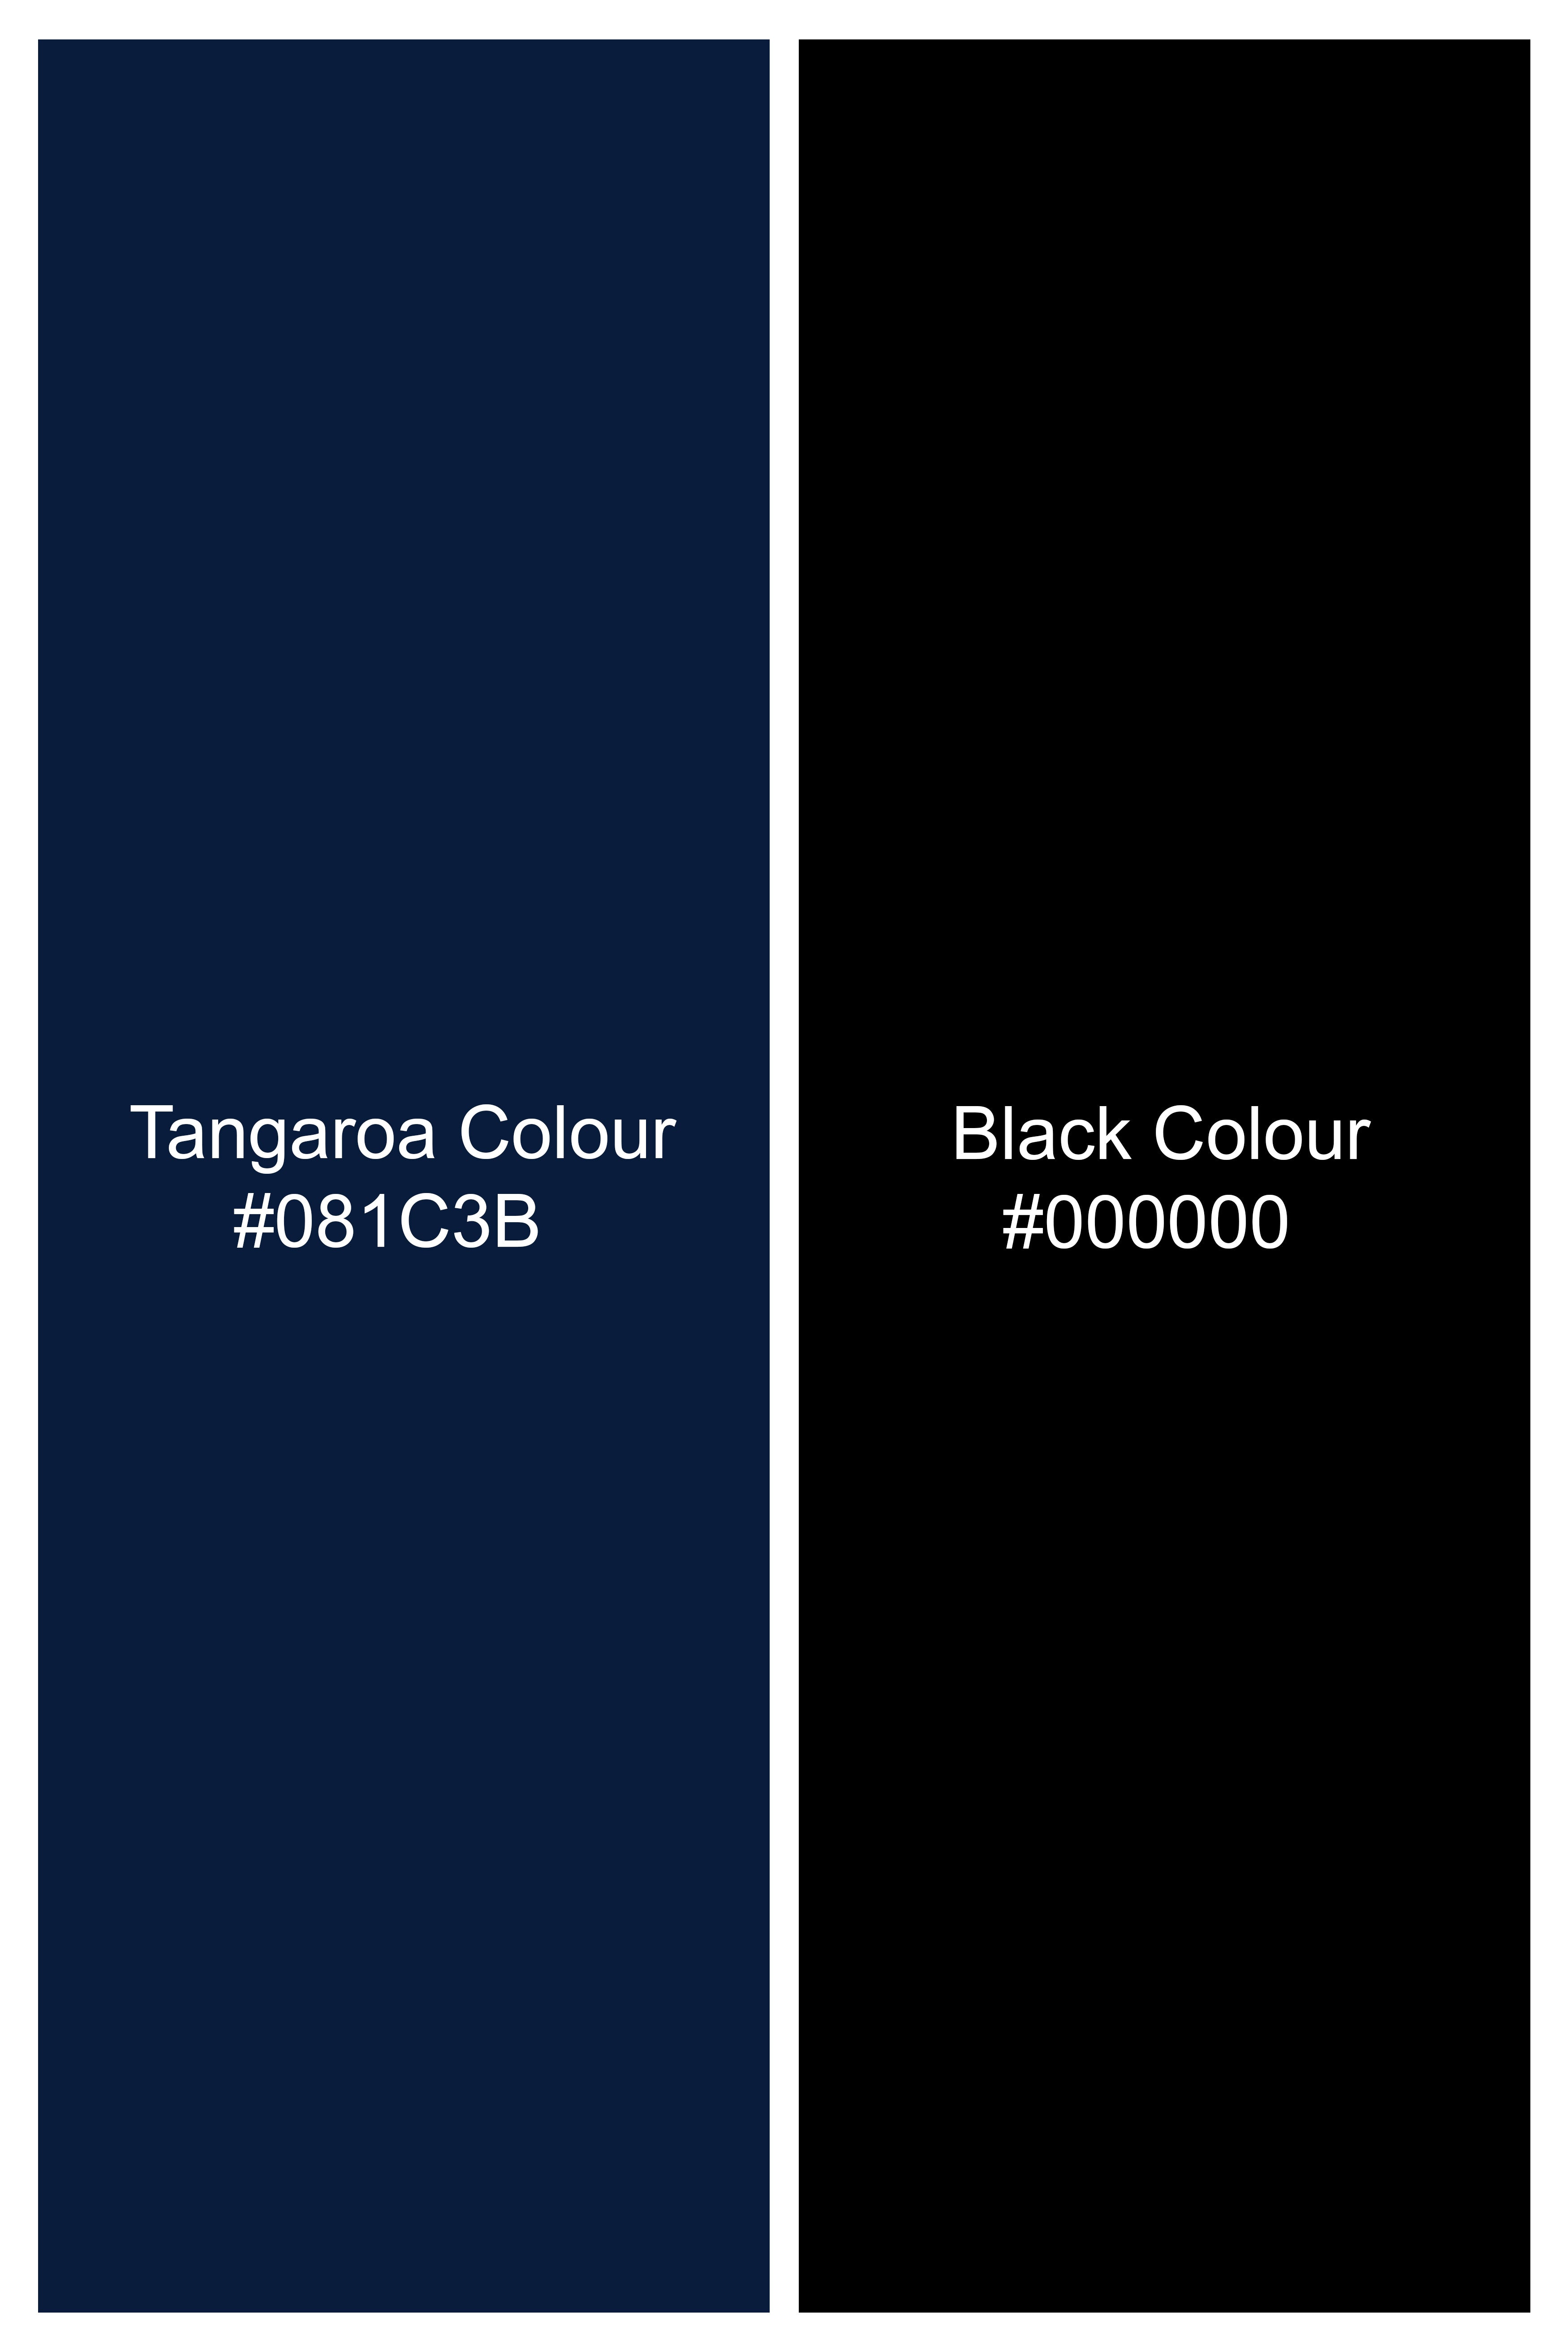 Tangaroa Blue and Subtle Black Checkered Wool Rich Suit ST2871-SB-36,ST2871-SB-38,ST2871-SB-40,ST2871-SB-42,ST2871-SB-44,ST2871-SB-46,ST2871-SB-48,ST2871-SB-50,ST2871-SB-52,ST2871-SB-54,ST2871-SB-56,ST2871-SB-58,ST2871-SB-60